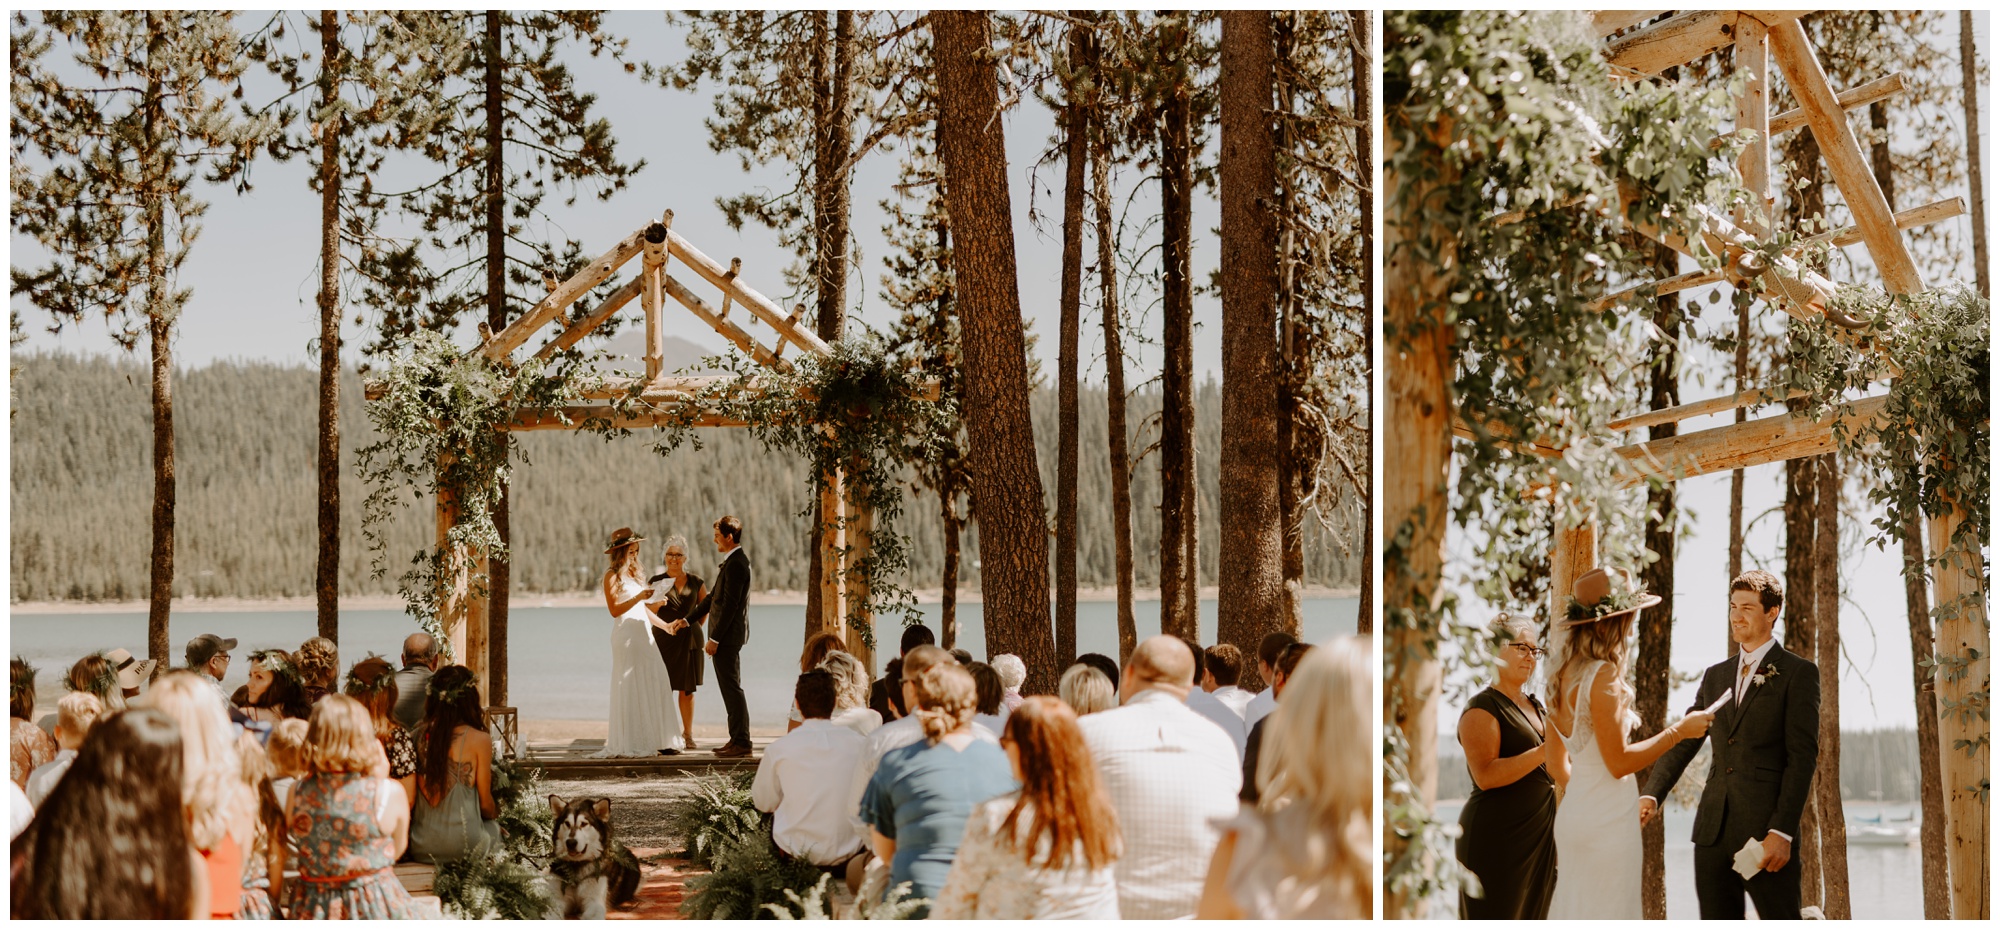 Bend Boho Campsite Wedding Eastern Oregon - Jessica Heron Images_0043.jpg